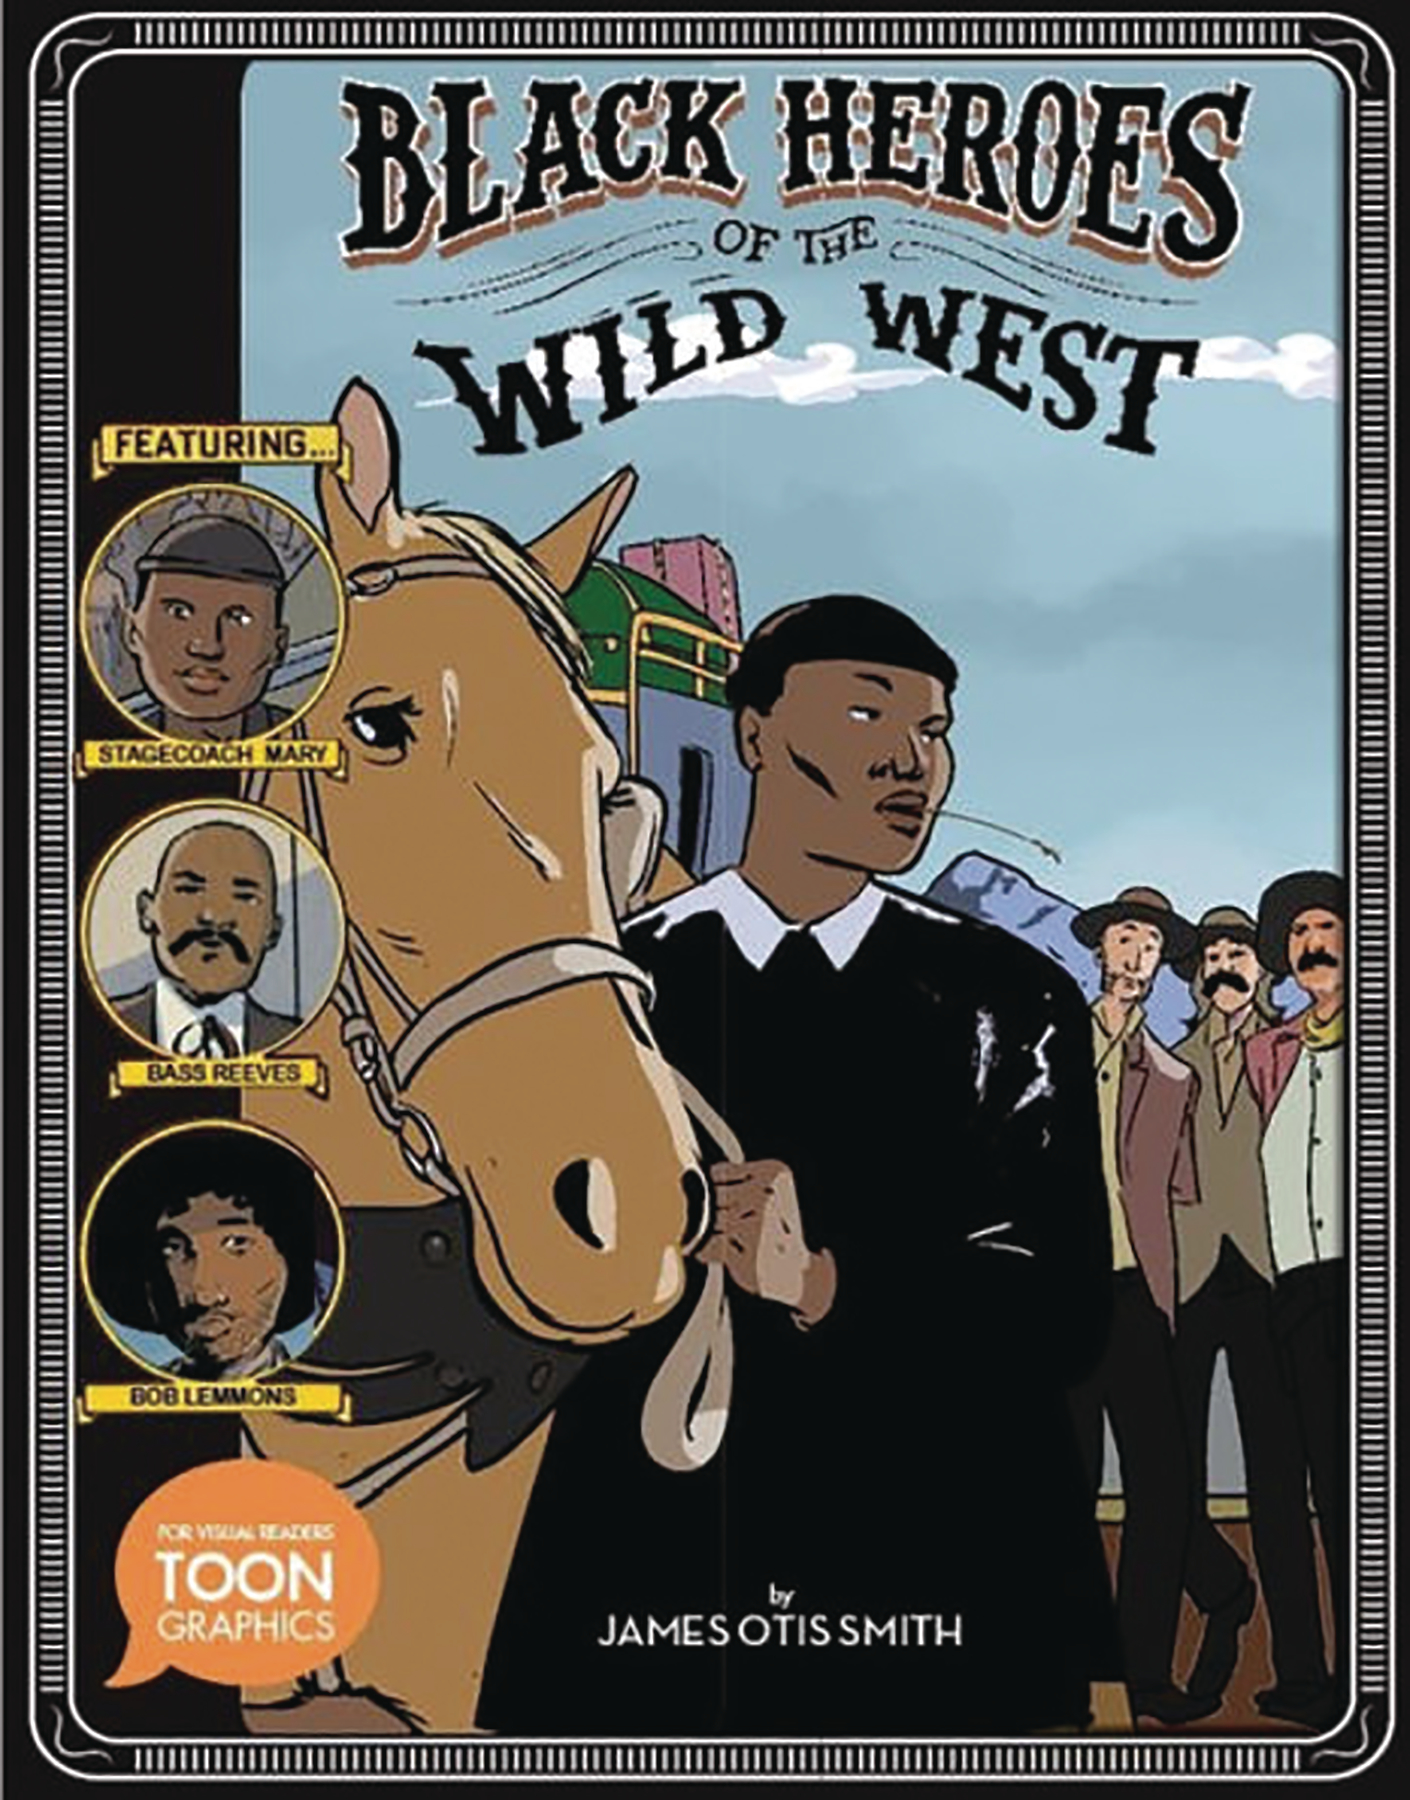 Black Heroes of Wild West Soft Cover Ya Graphic Novel